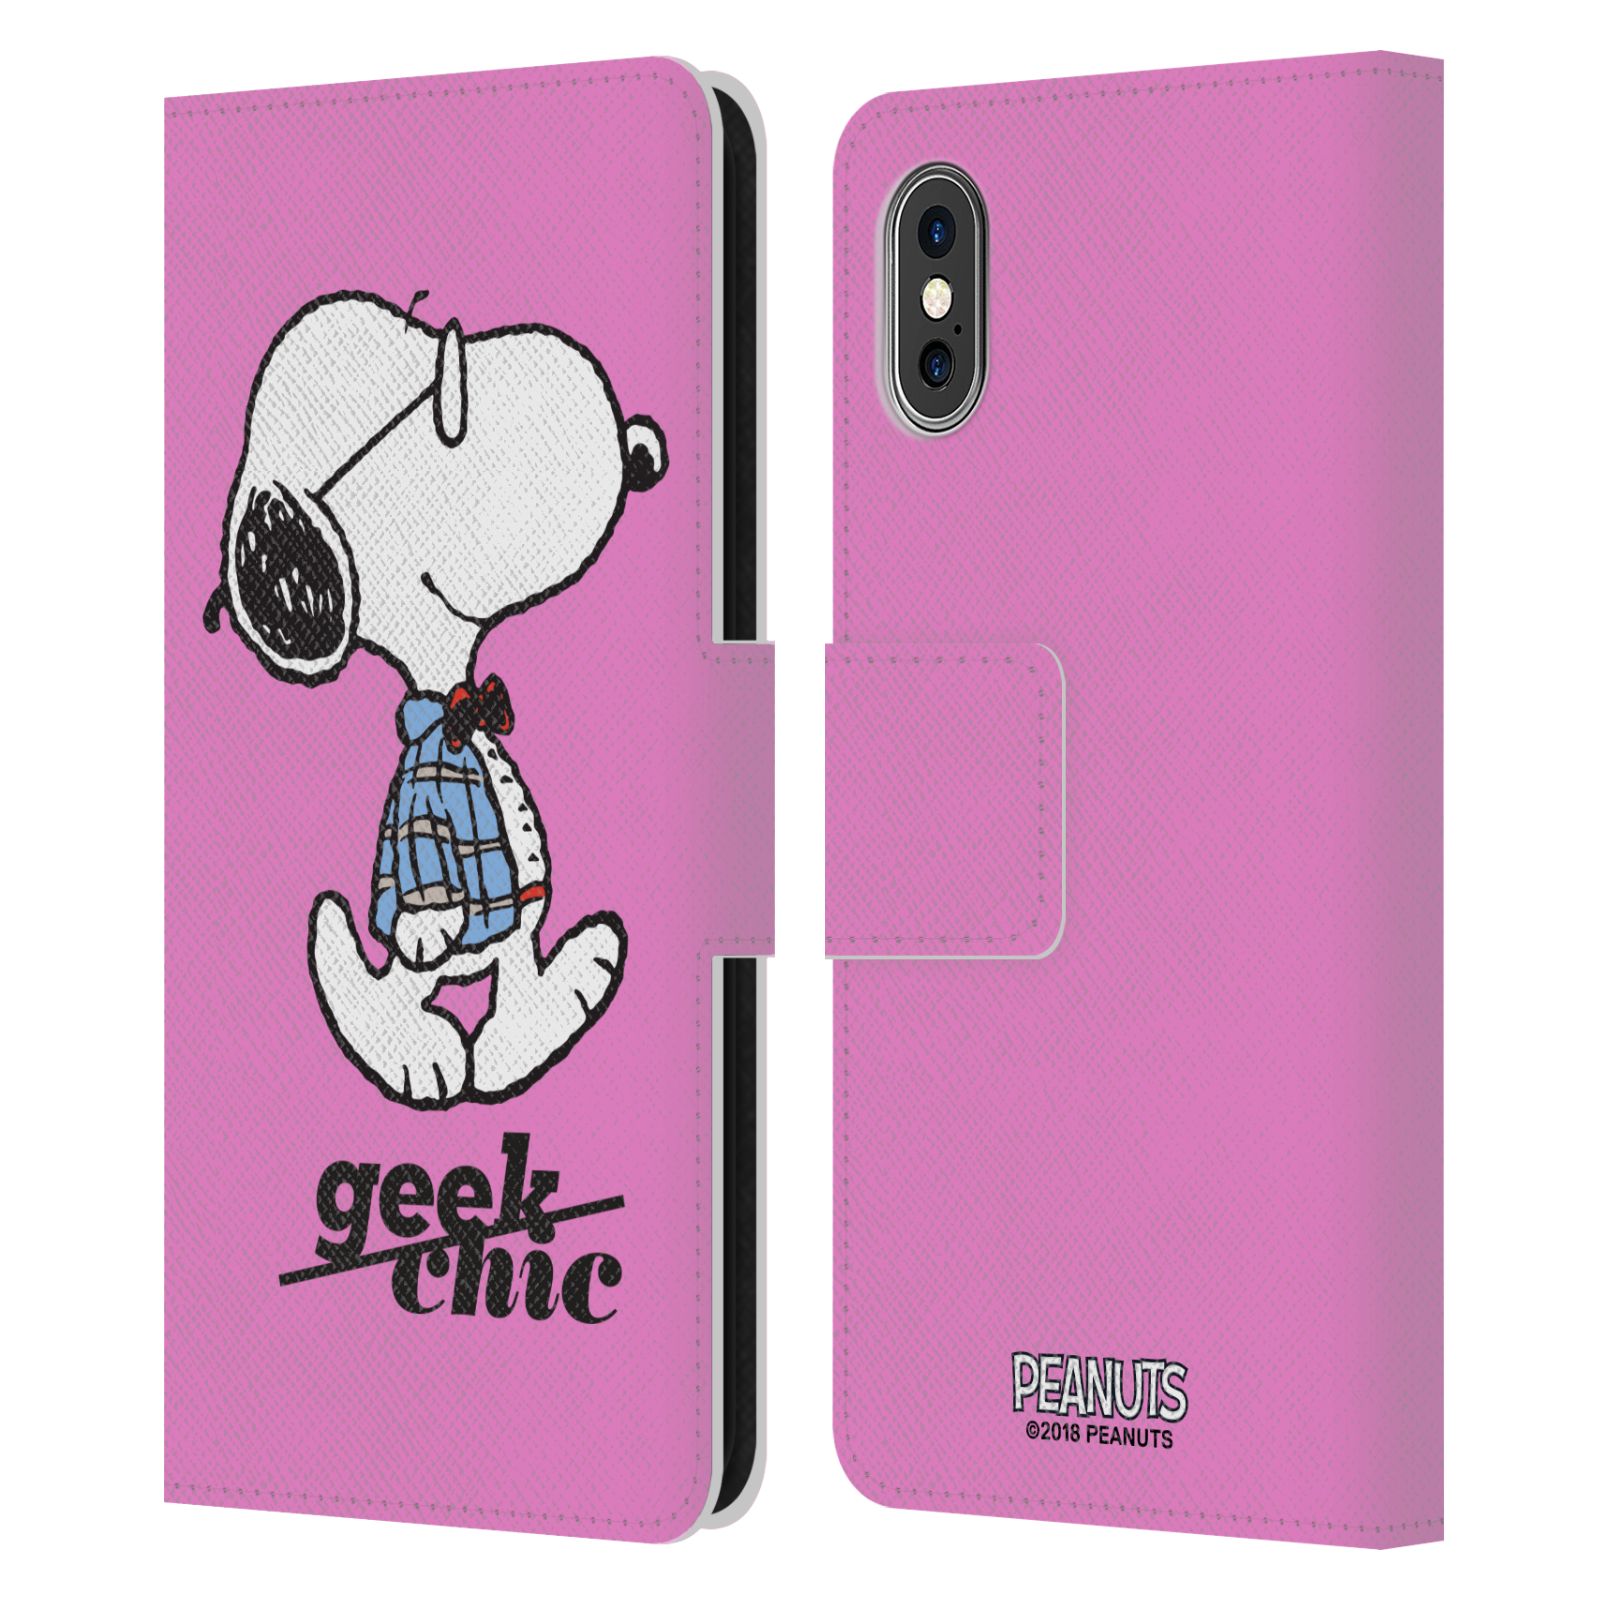 Pouzdro na mobil Apple Iphone X / XS - Head Case - Peanuts - růžový pejsek snoopy nerd